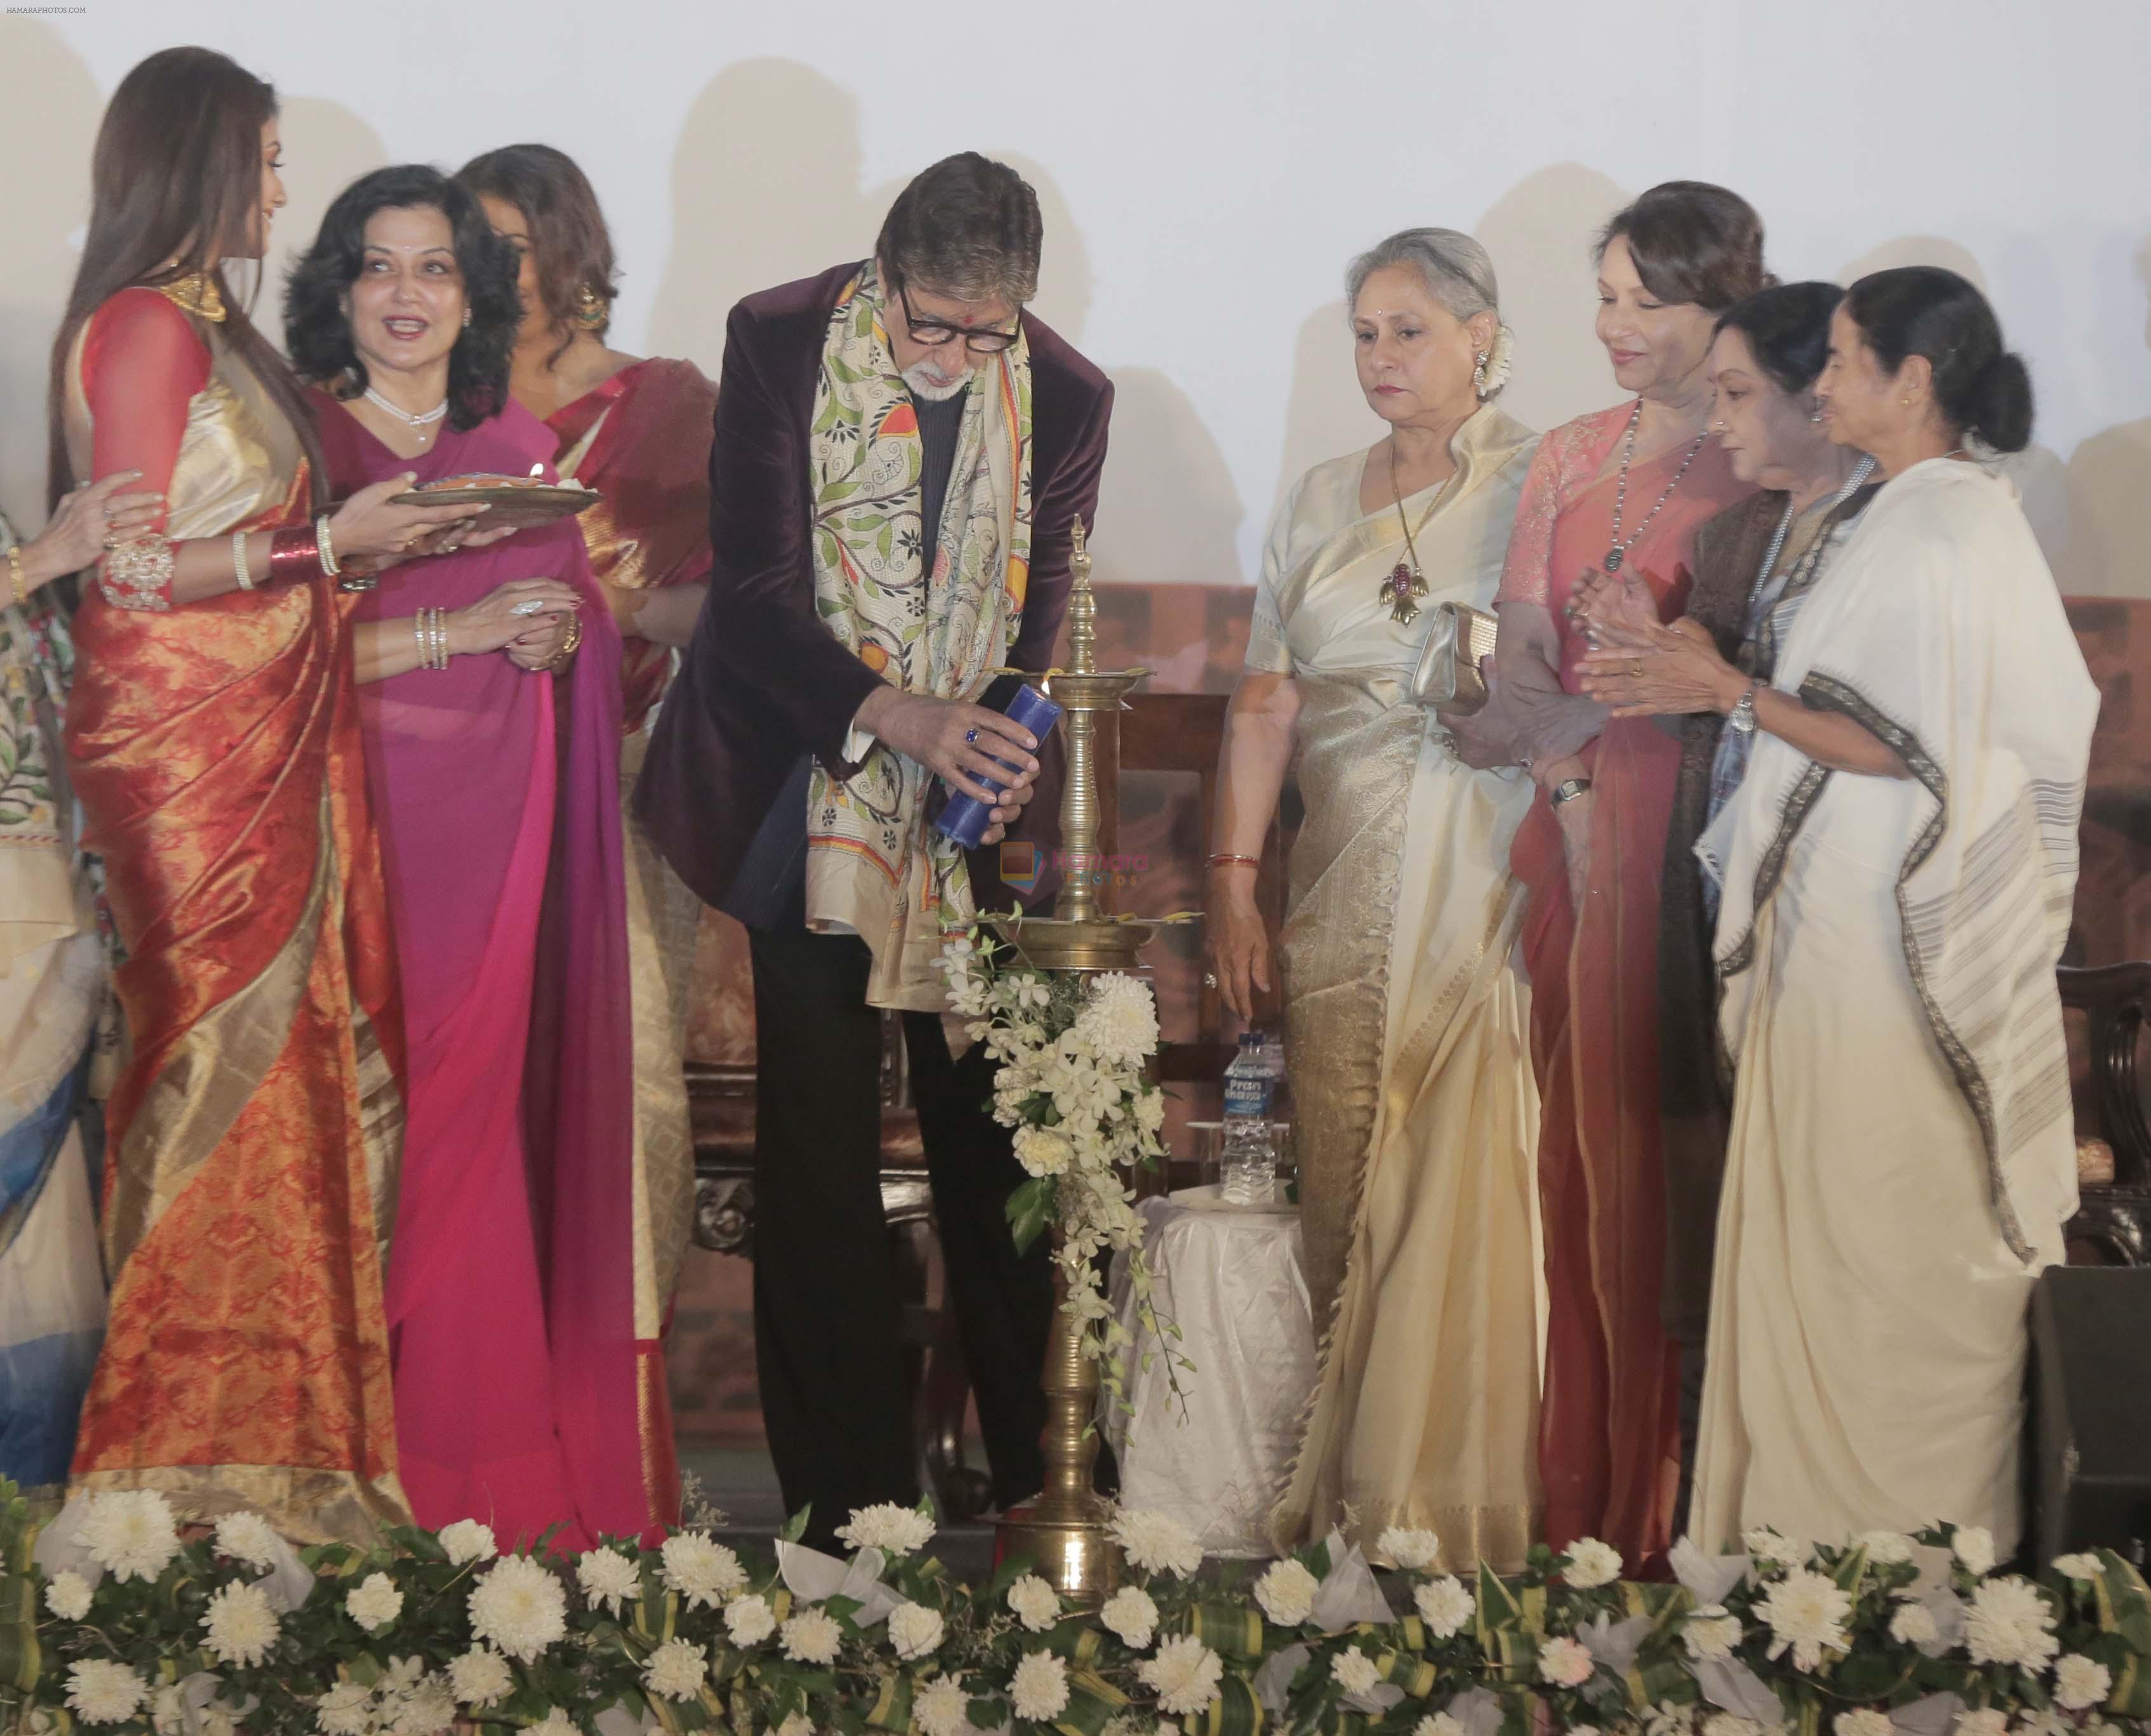 Amitabh Bachchan, Vidya Balan, Moushumi Chatterjee,Mamta Banerjee, Jaya Bachchan, Sharmila Tagore at 21st Kolkata International Film Fastival on 14th Nov 2015